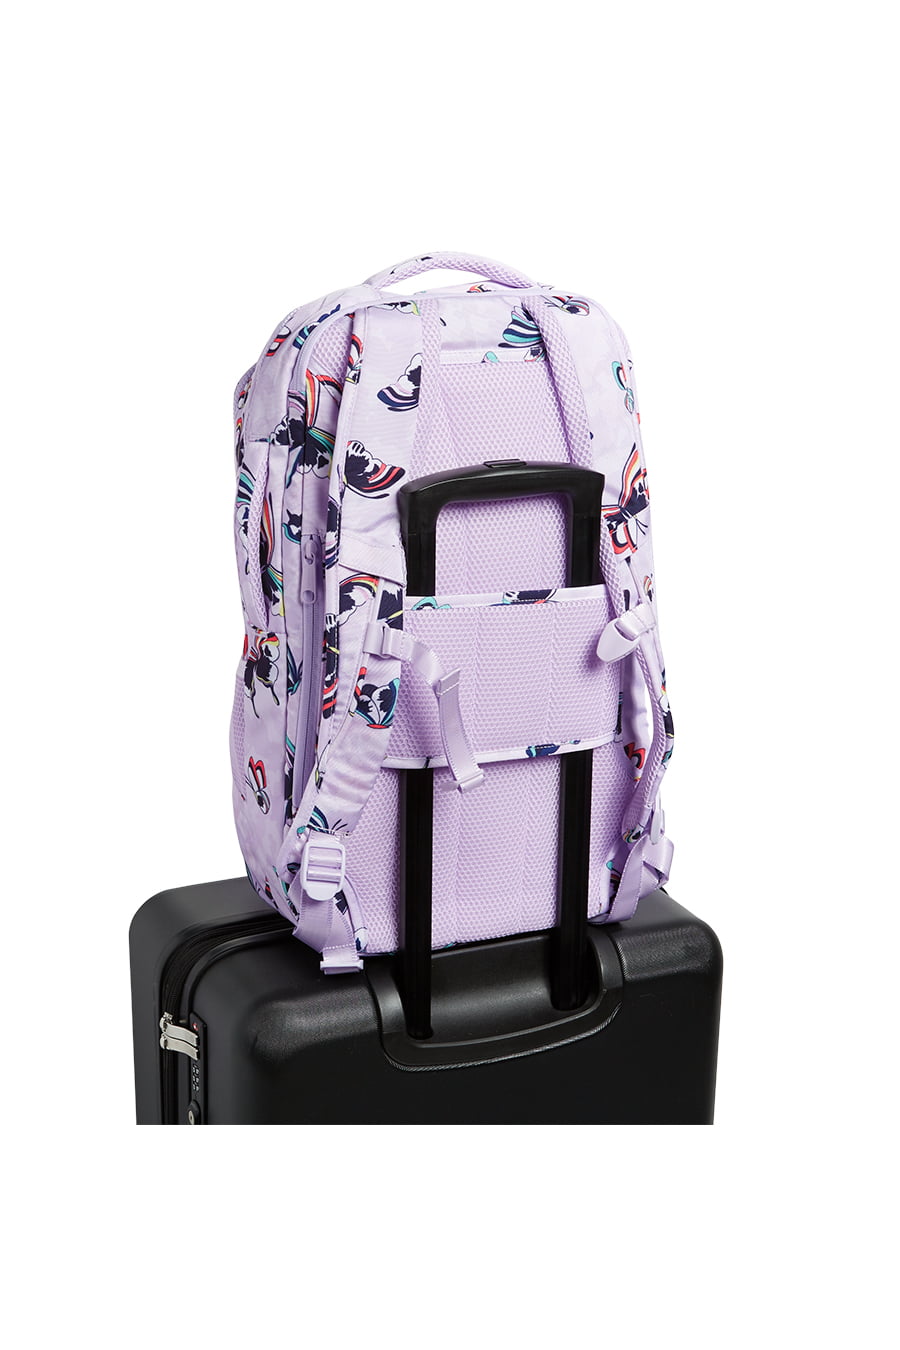 Vera Bradley Women's Recycled Lighten Up XL Journey Backpack 